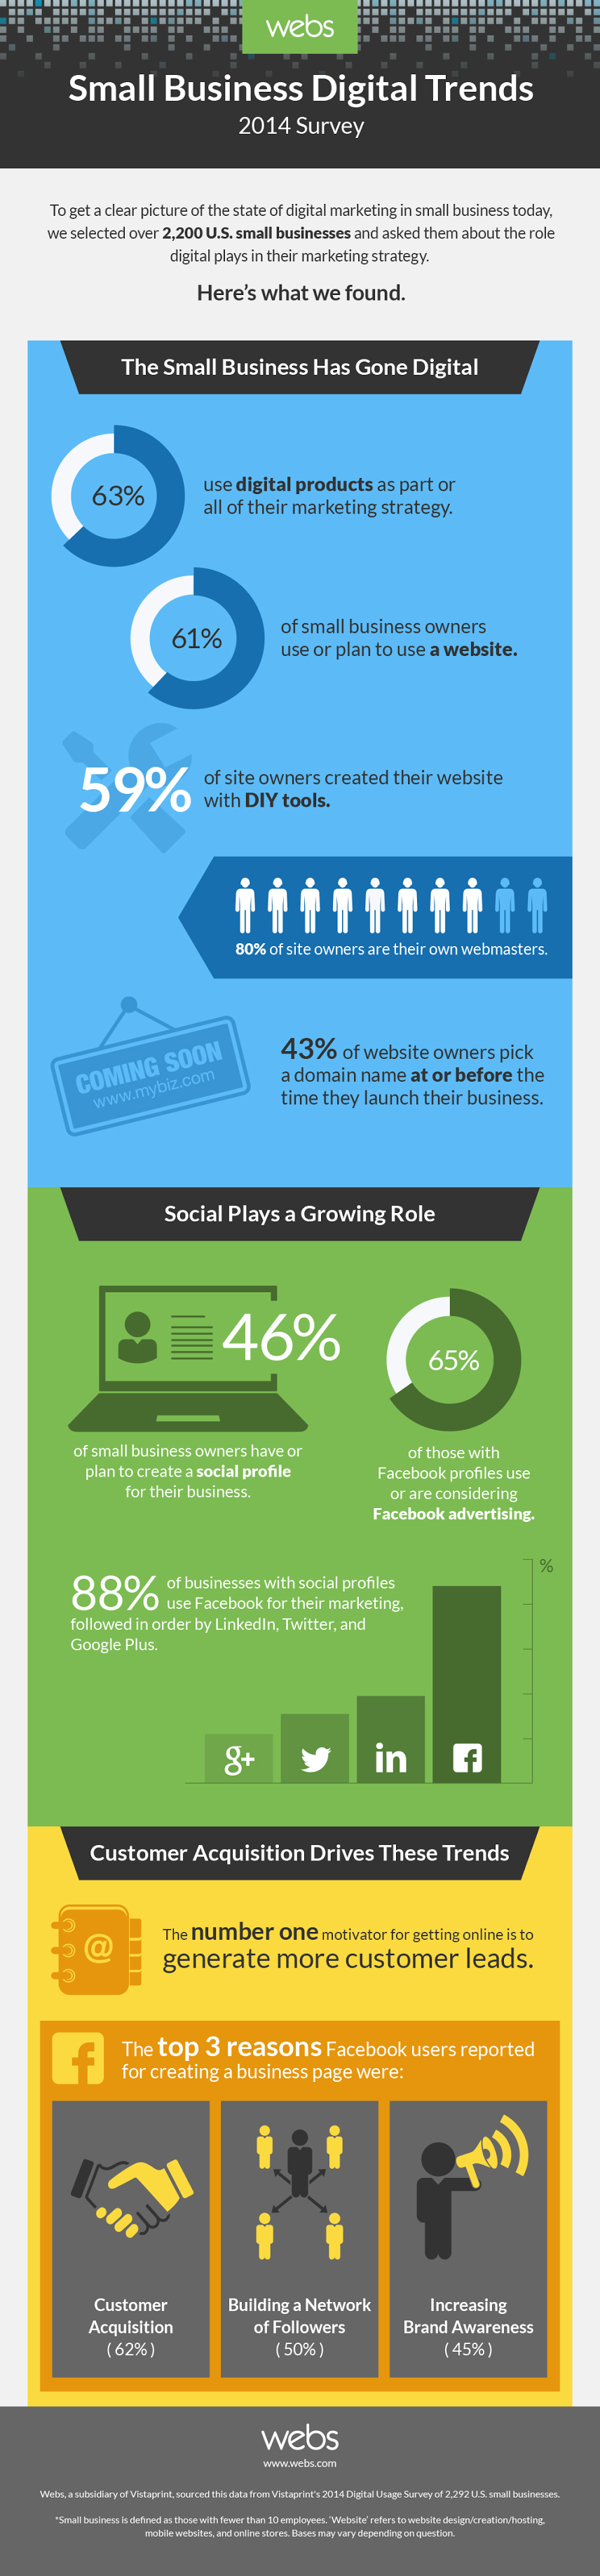 Webs Small Business #DigitalMarketing and #SocialMedia Trends 2014 - #infographic #internetmarketing